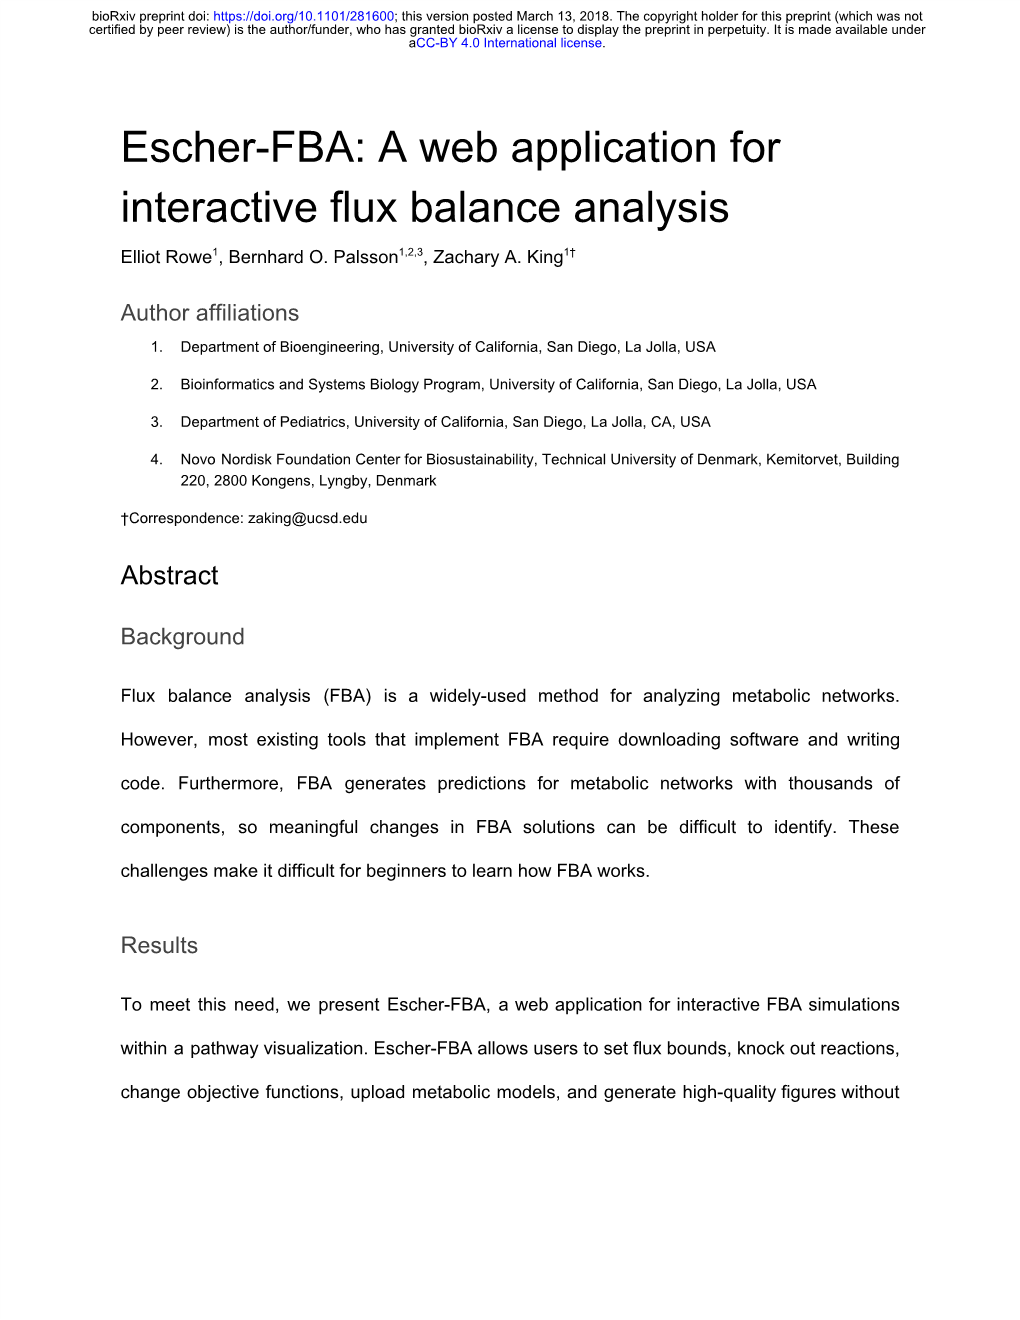 Escher-FBA: a Web Application for Interactive Flux Balance